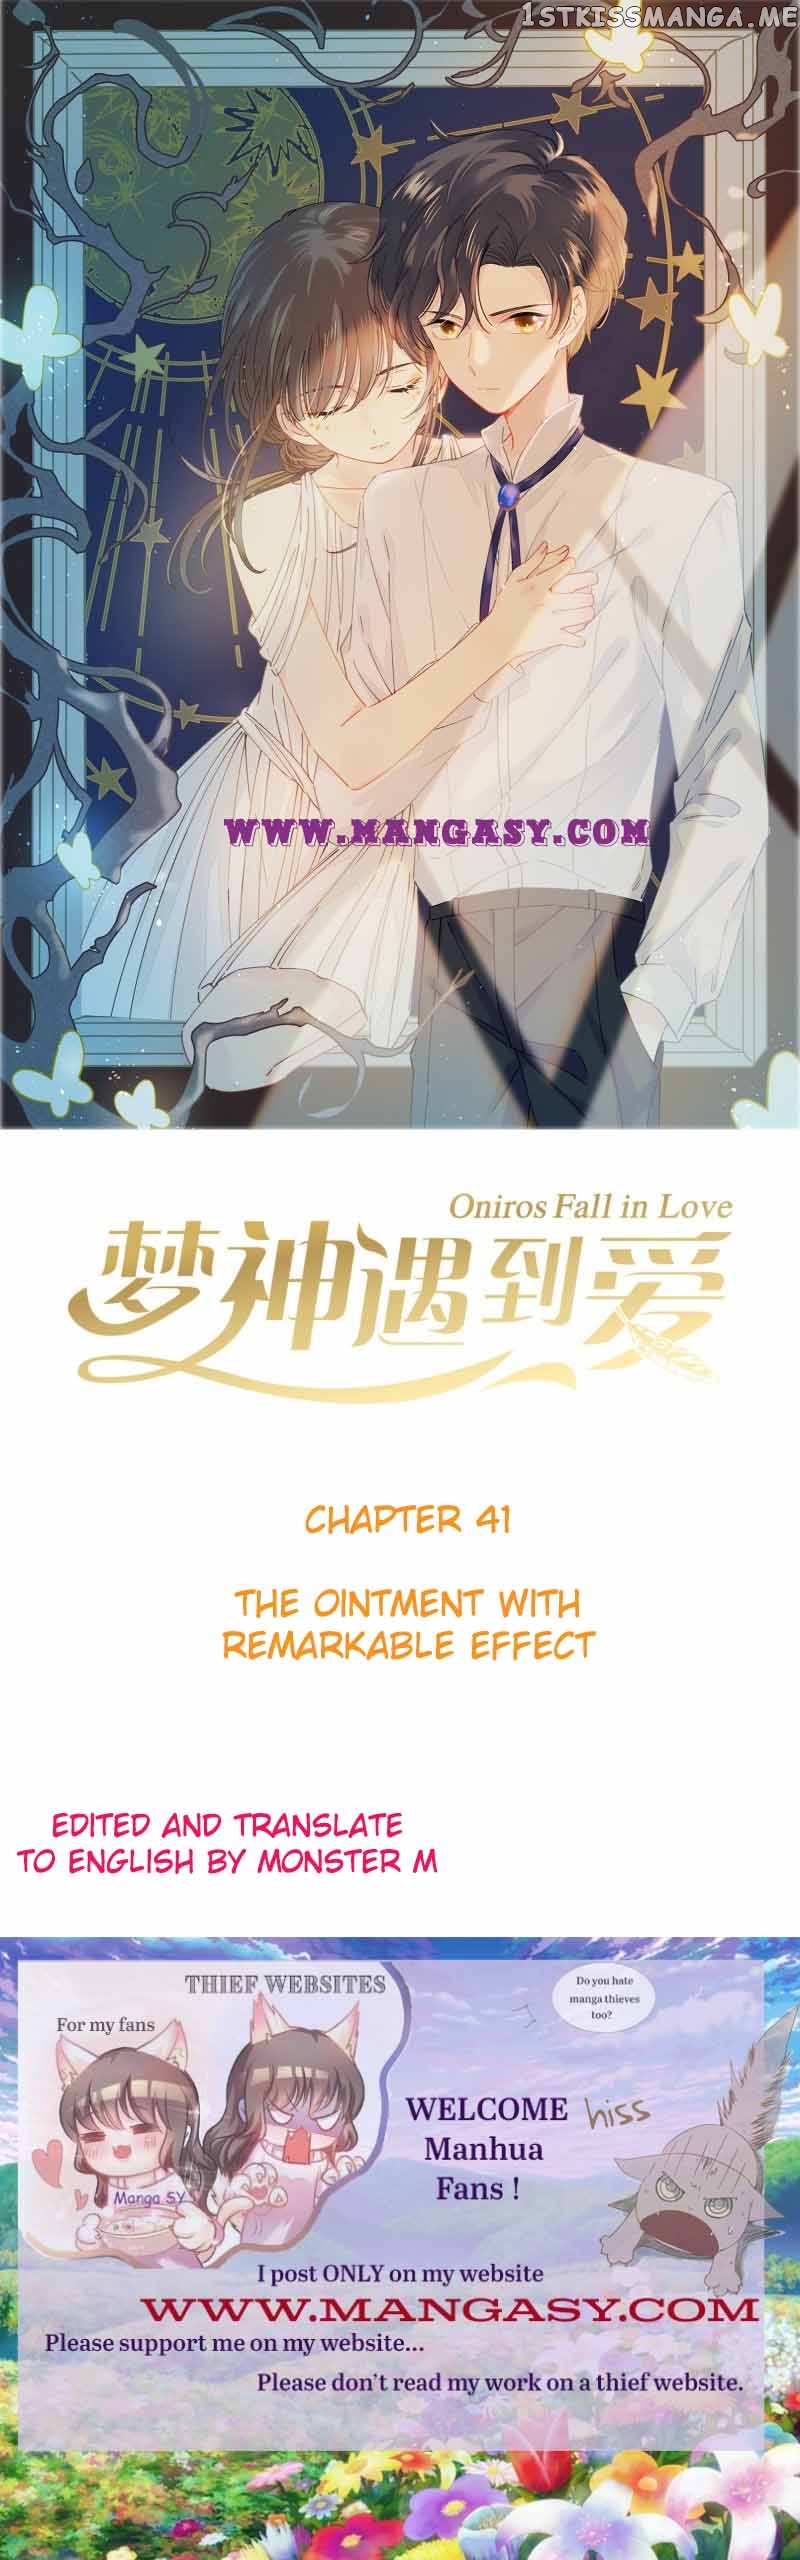 Oniros Found Love Chapter 41 - page 1